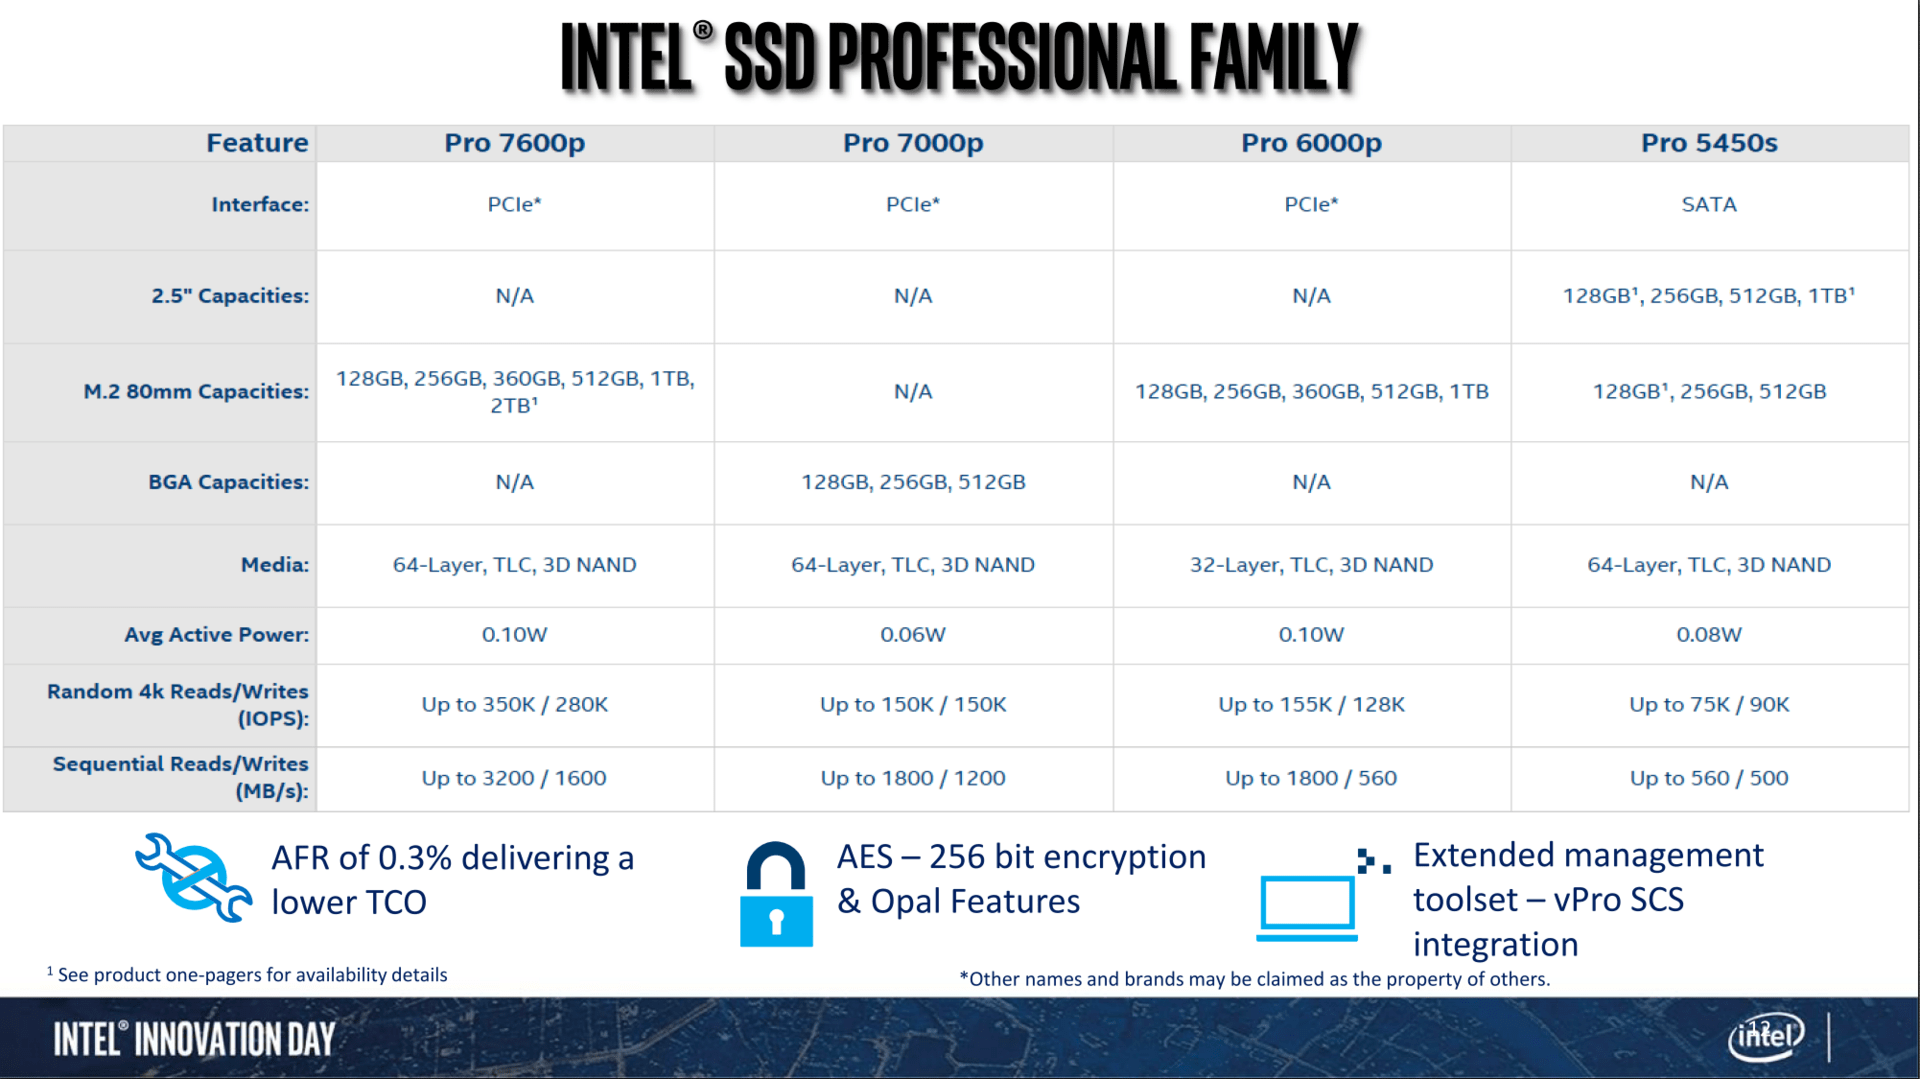 Intel Professional SSD Pro 7000p